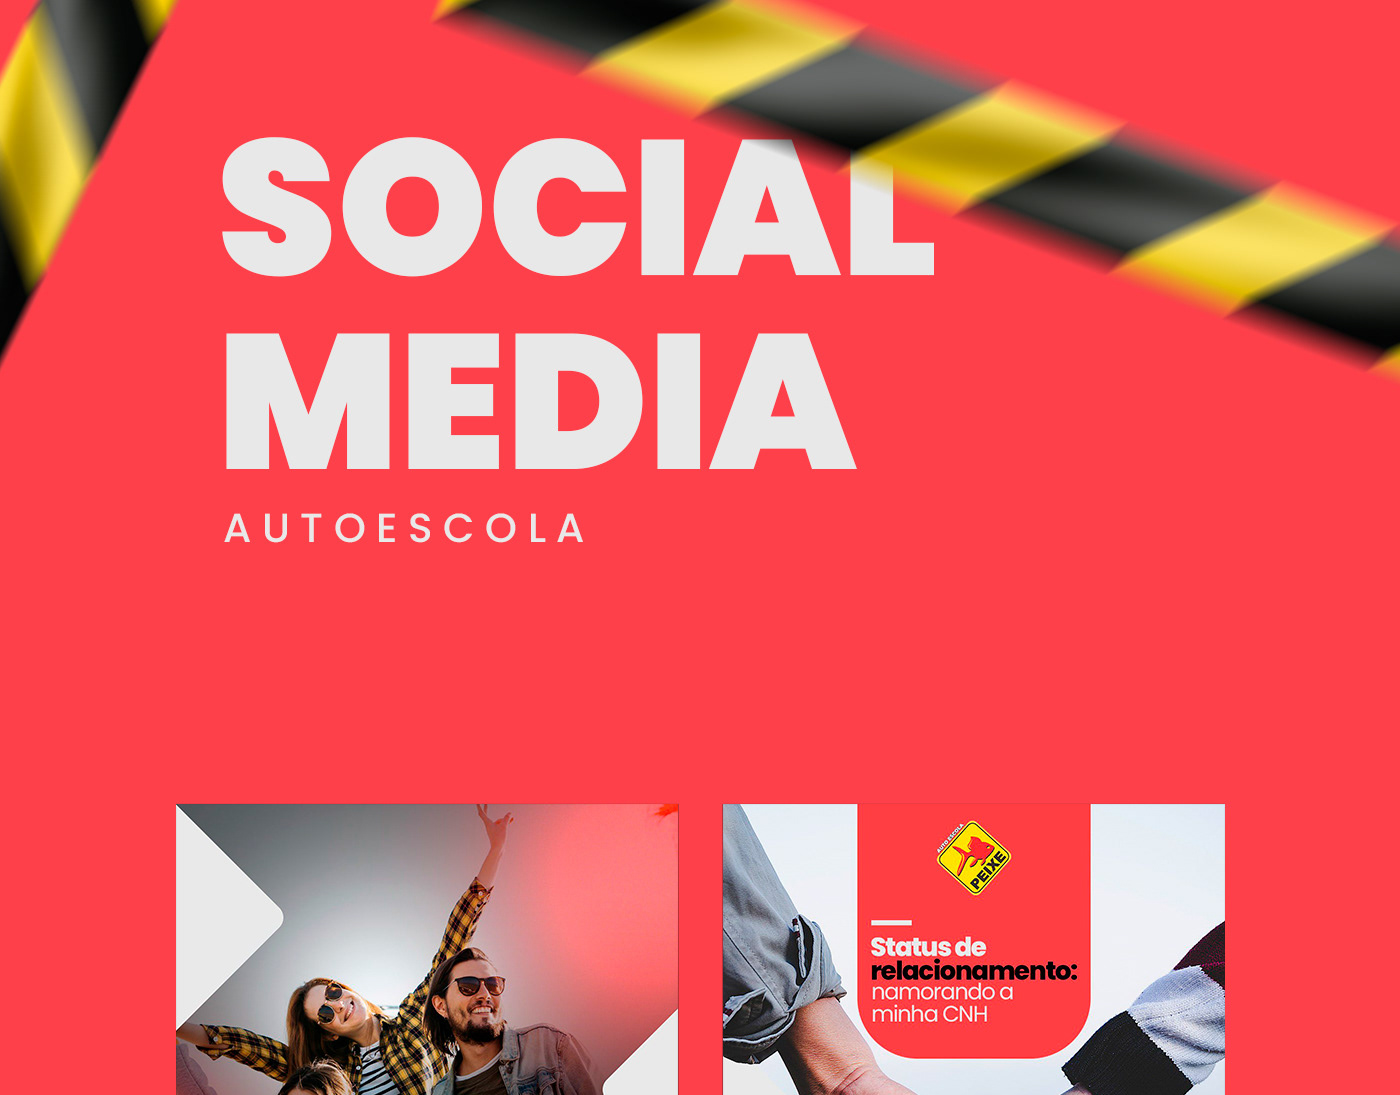 autoescola designer driving school marketing   social media Social media post